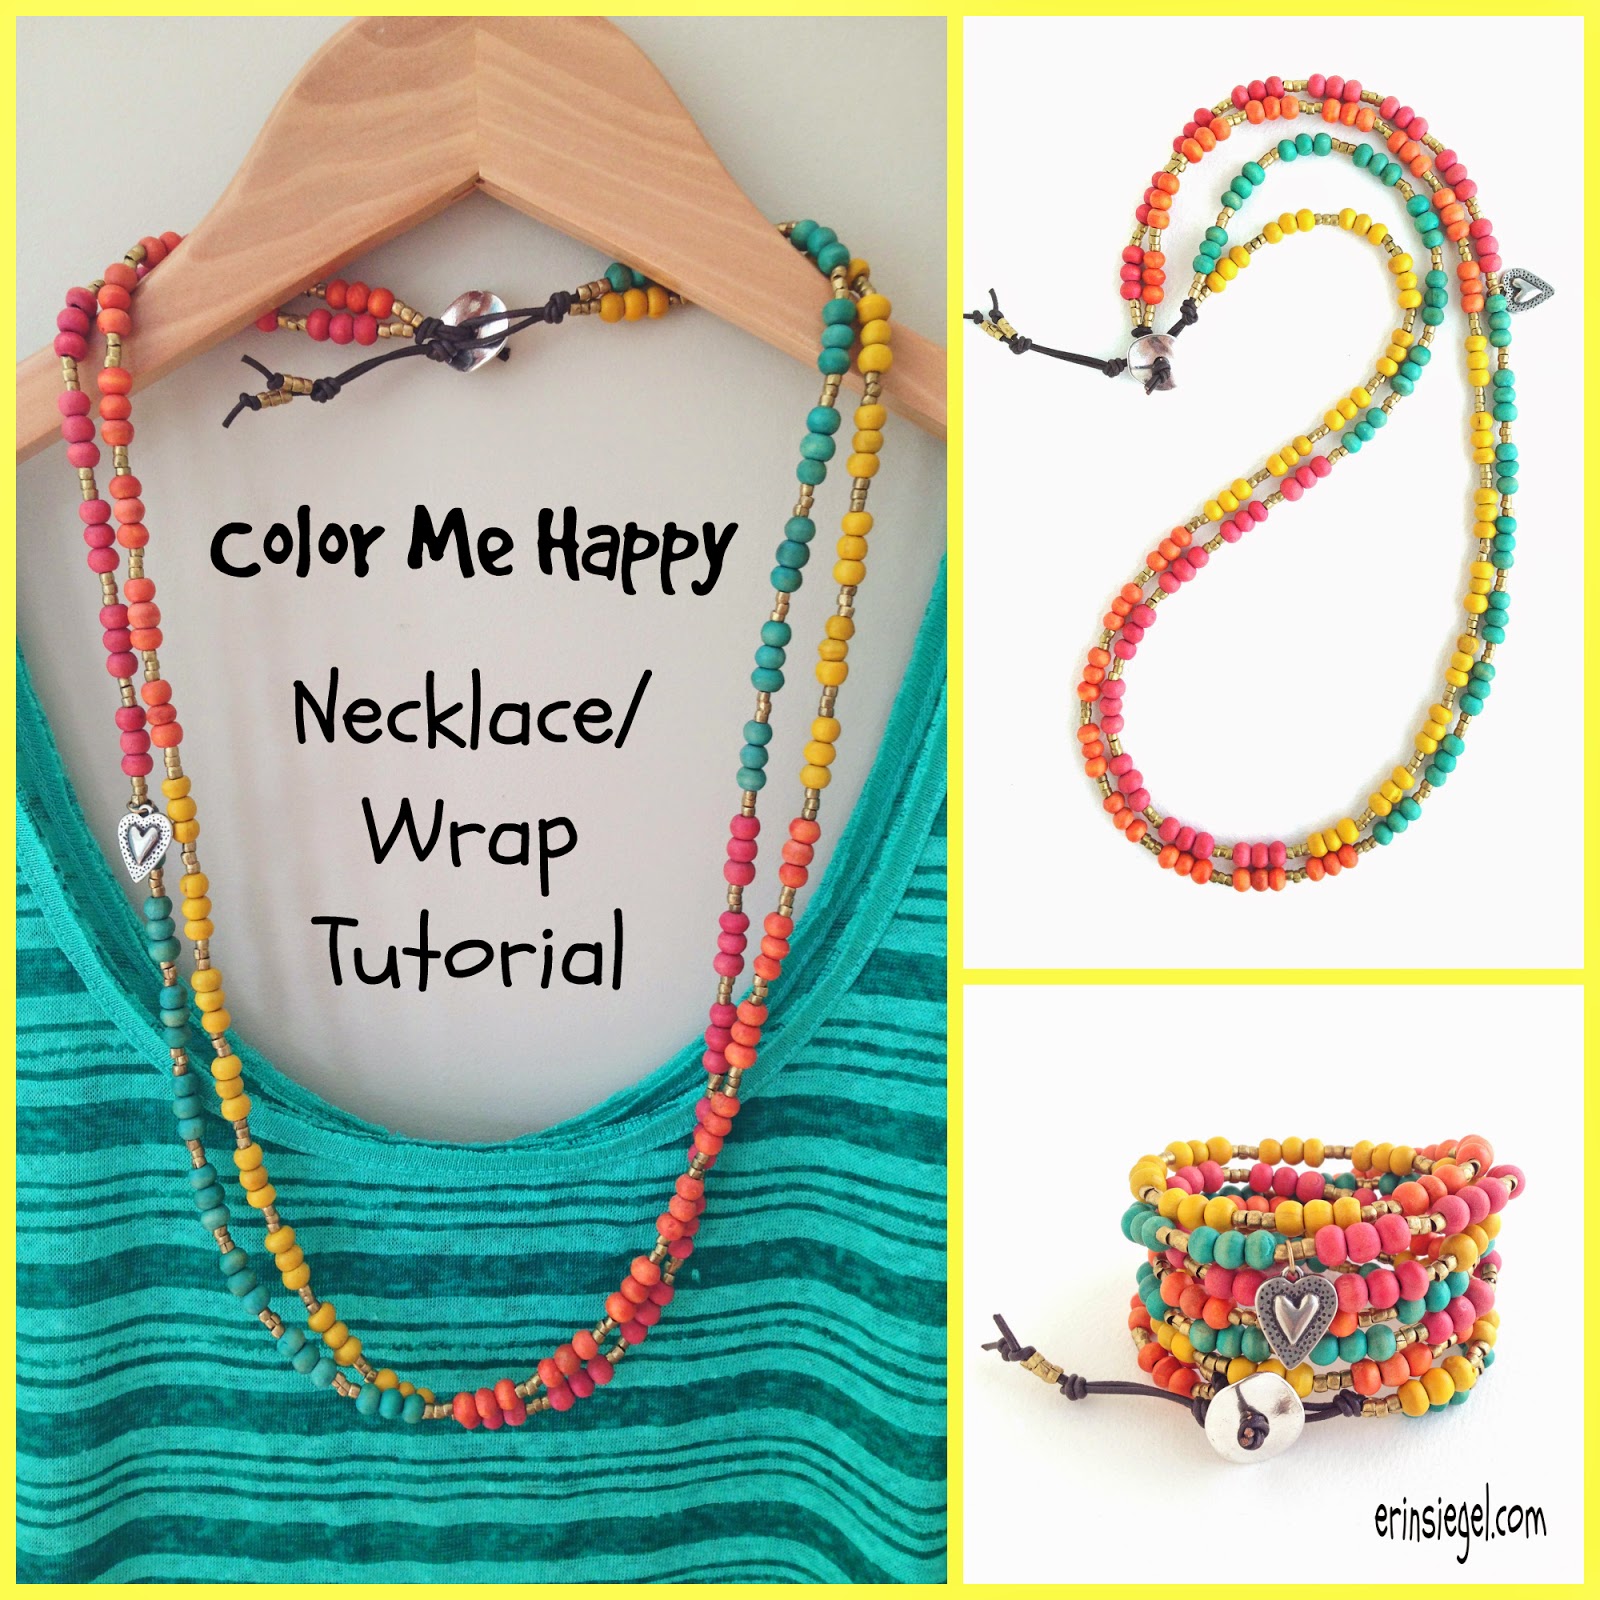 http://www.erinsiegeljewelry.blogspot.com/2014/05/color-me-happy-necklacewrap-diy-tutorial.html